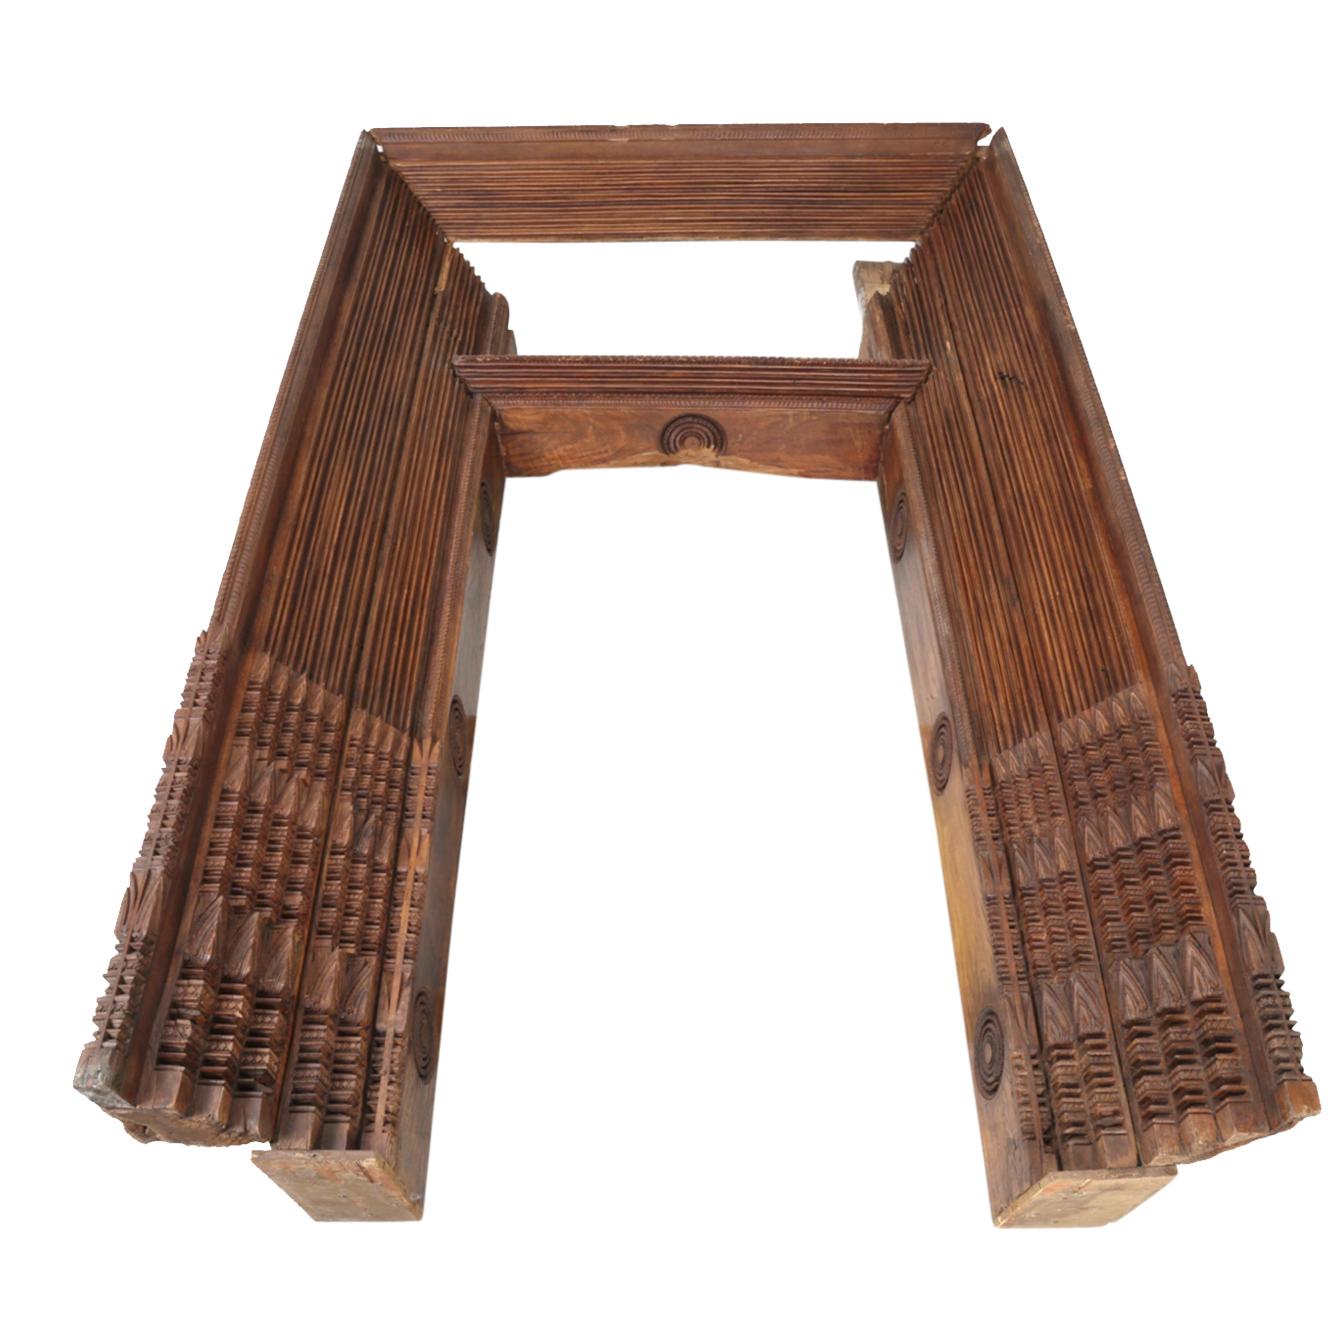 Antique Teak Wood Door Frame India Exquisite Carving Details (3) Available c1800